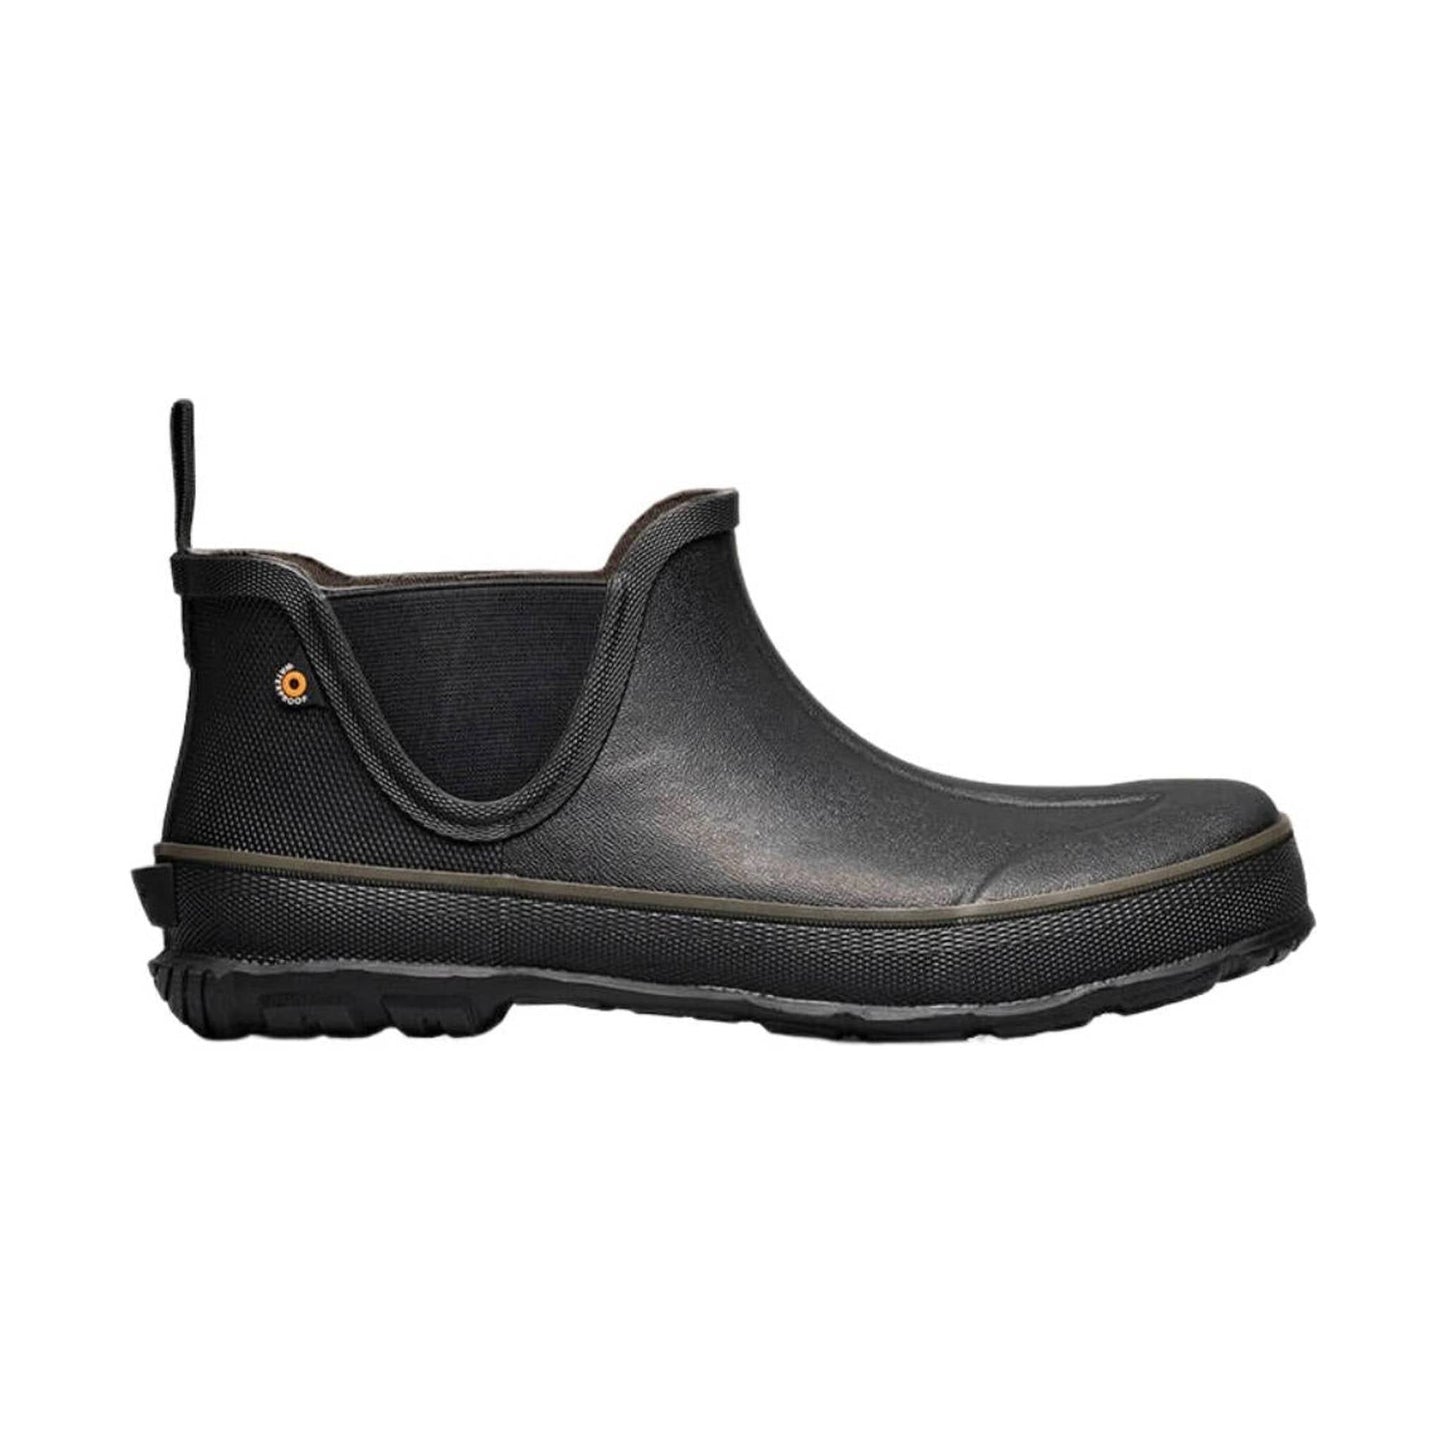 Bogs Men's Digger Slip On Farm Rain Boot - Black